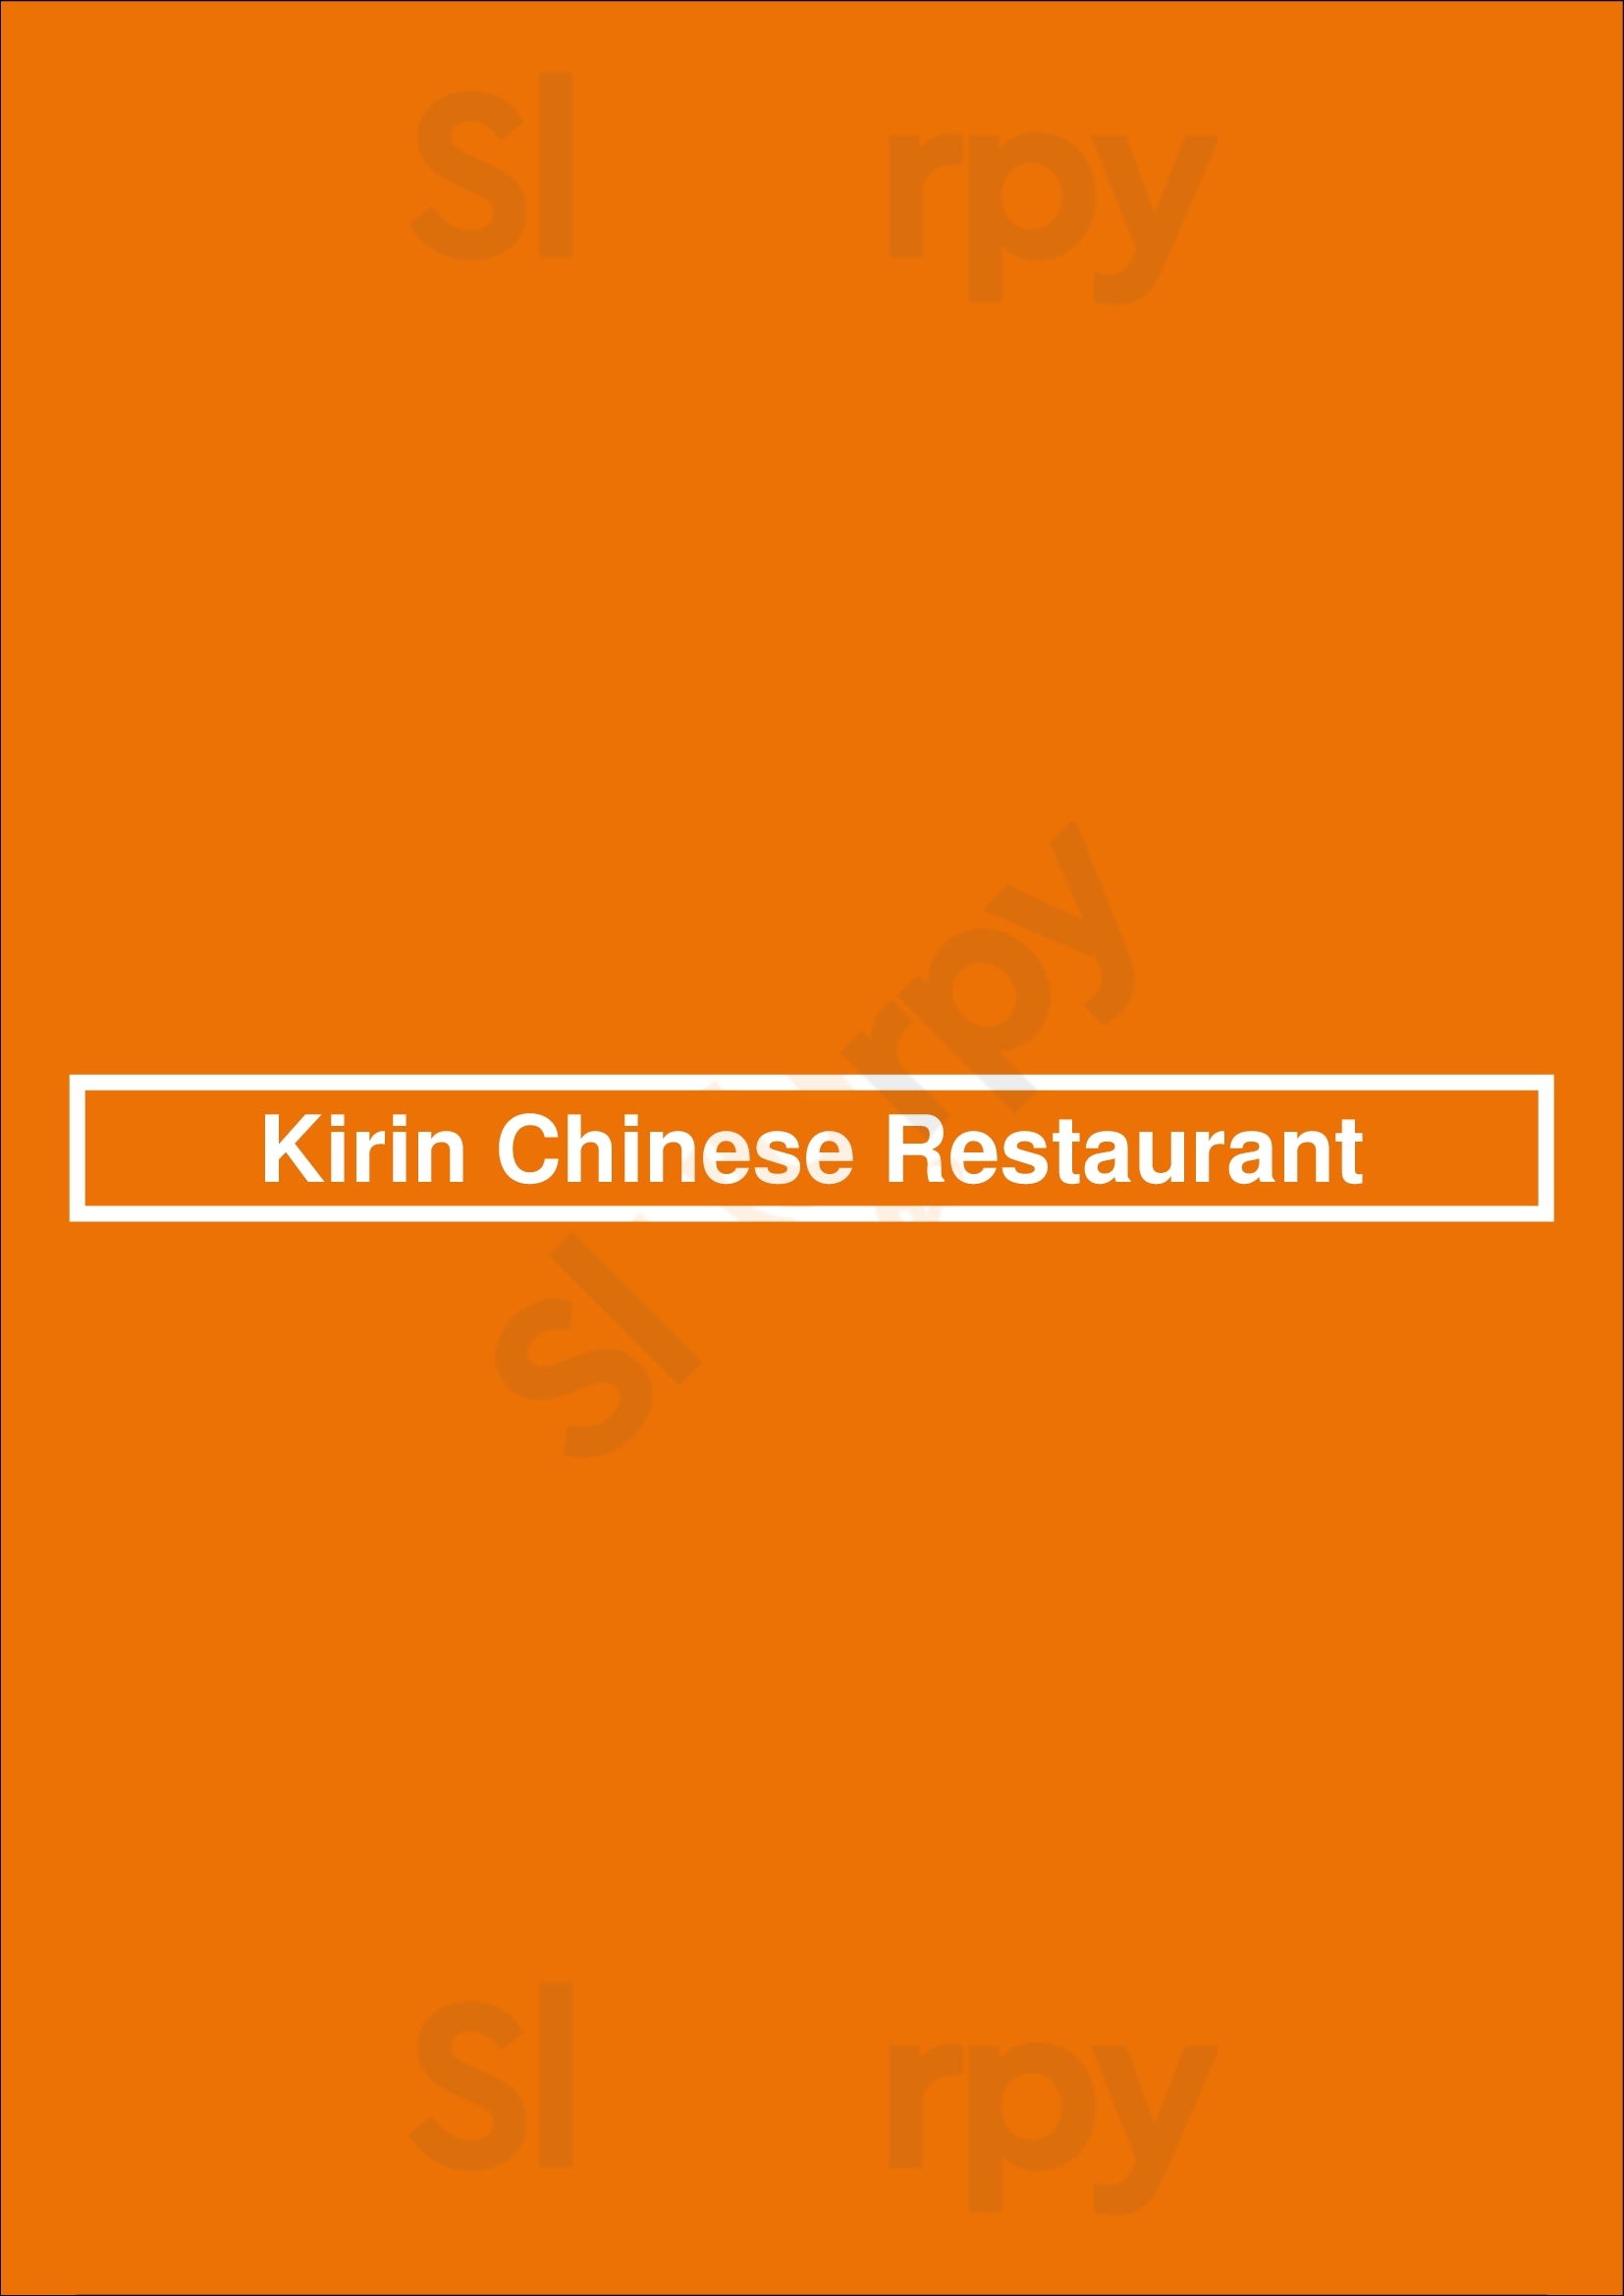 Kirin Chinese Restaurant Mountain View Menu - 1